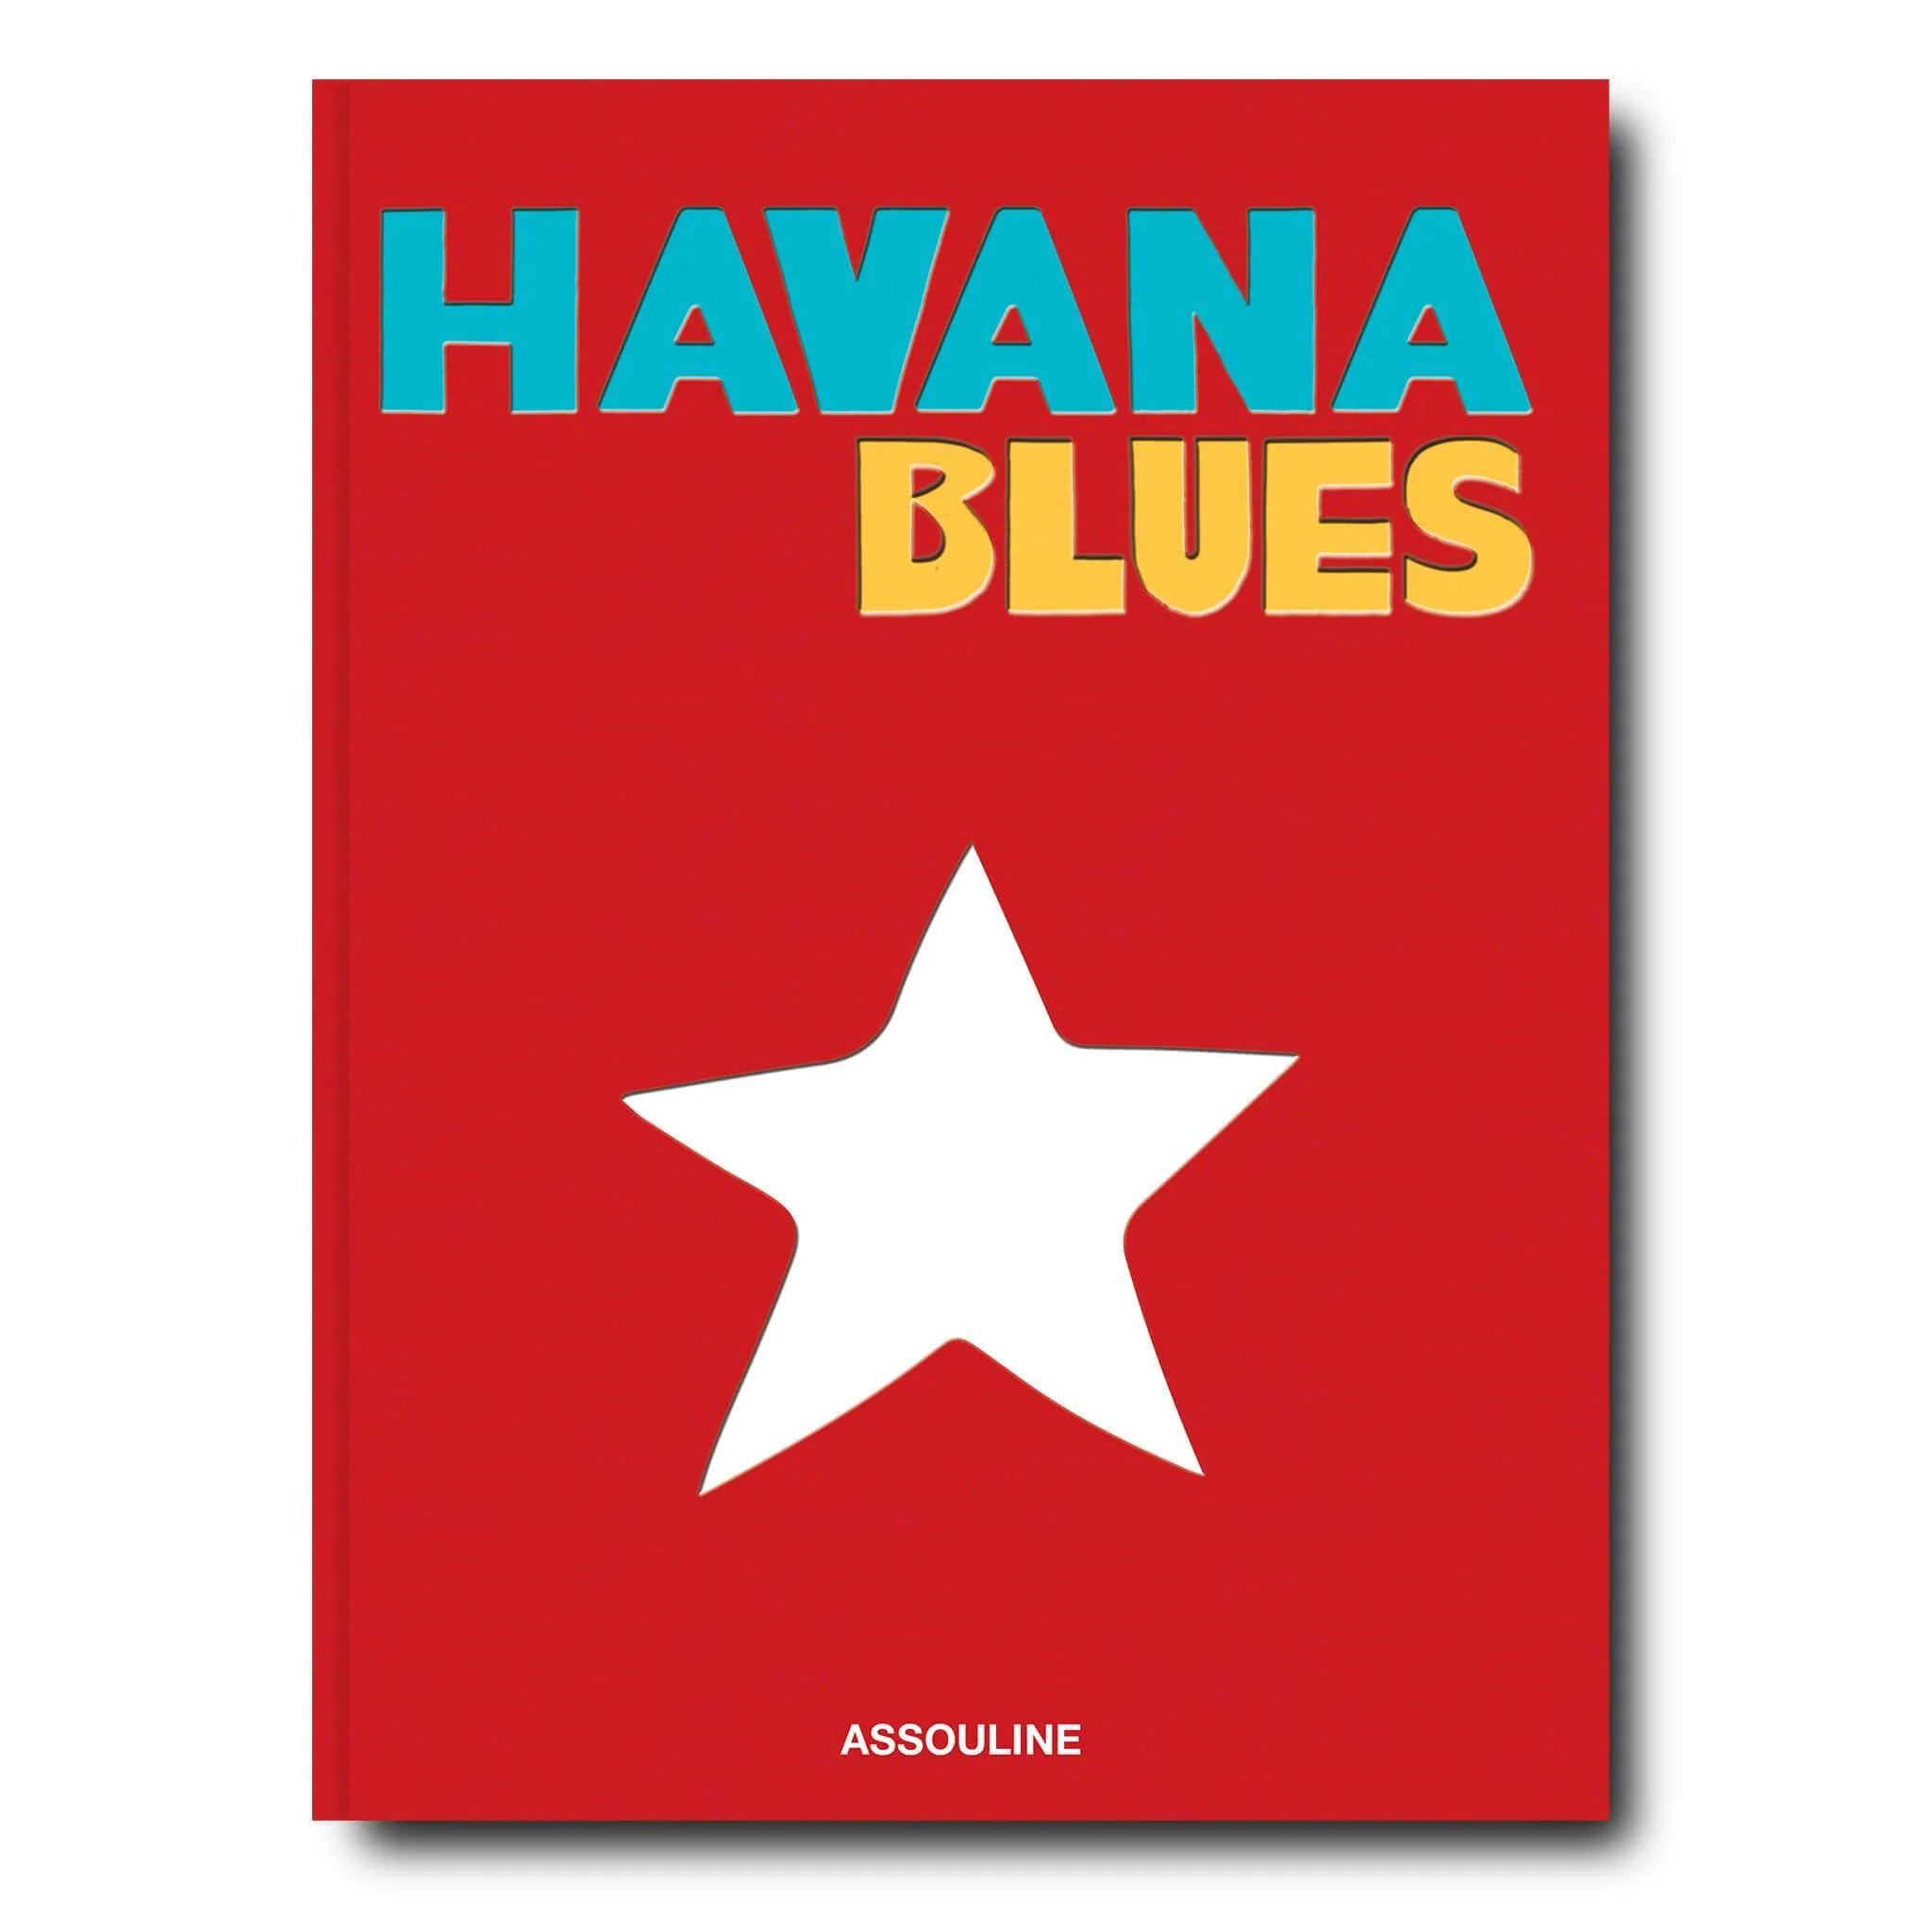 HAVANA BLUES, libro decorativo rojo de viajes